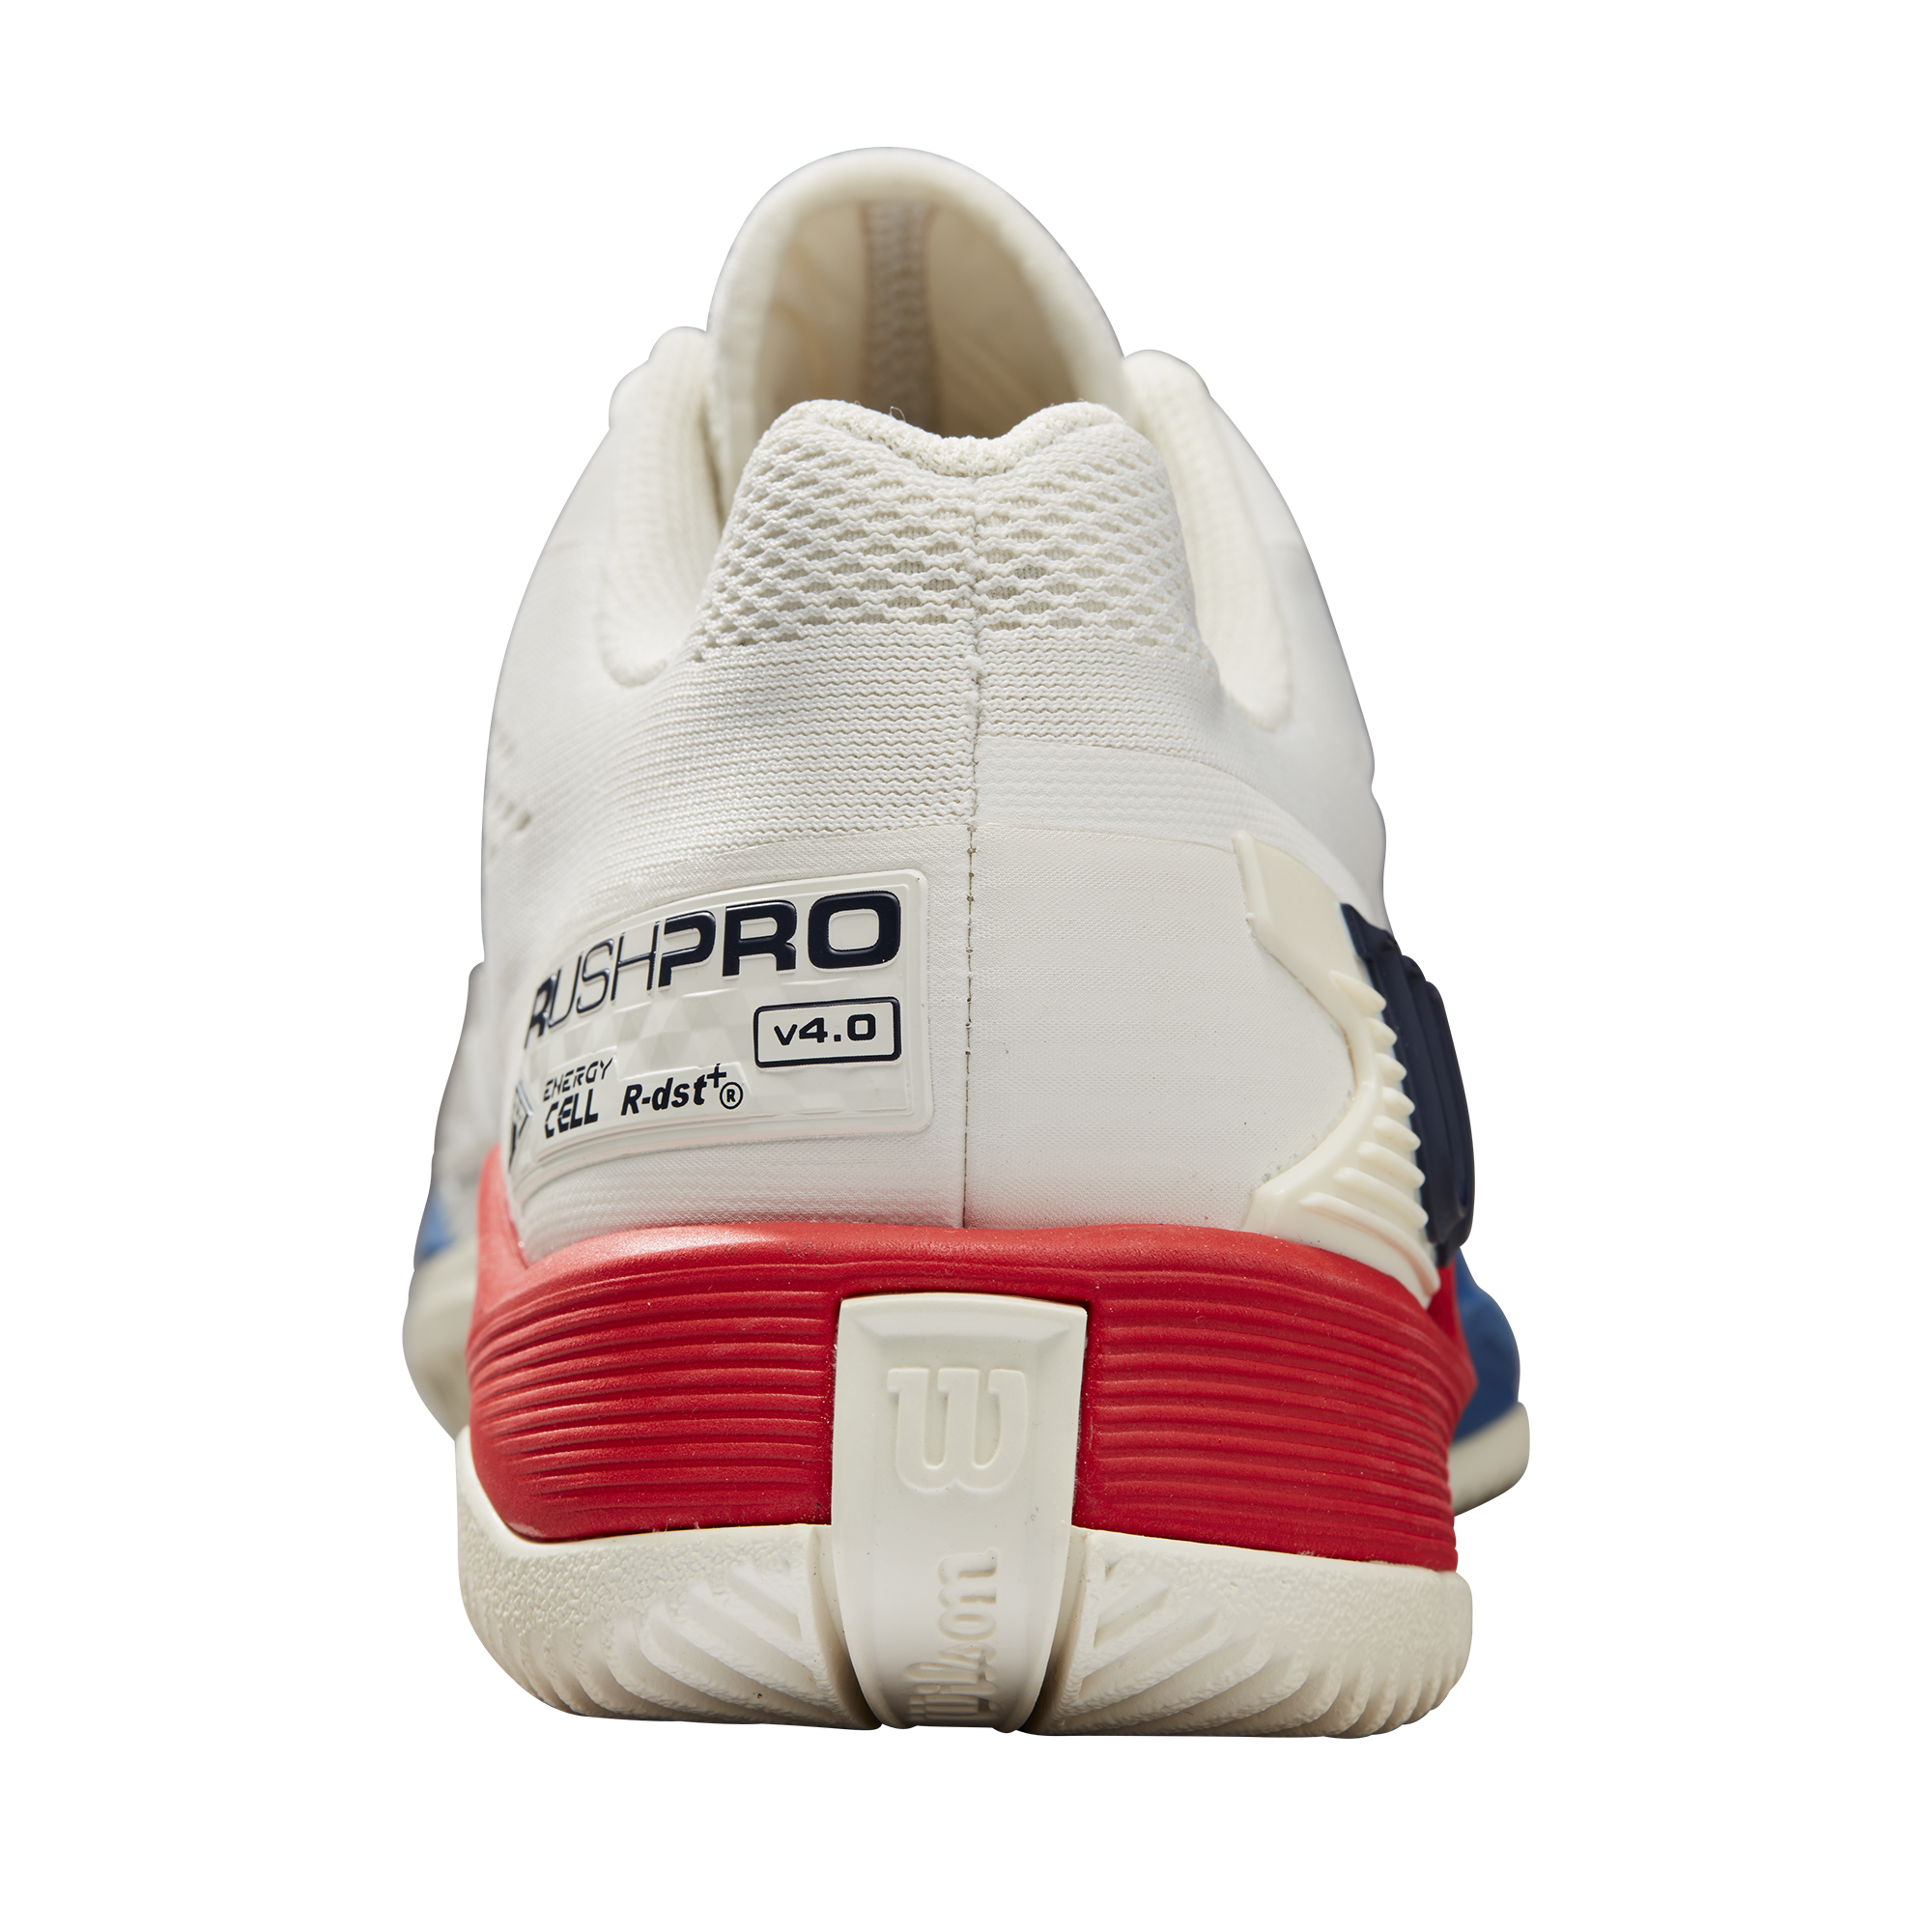 Wilson Rush Pro 4.0 Men's Tennis Shoe